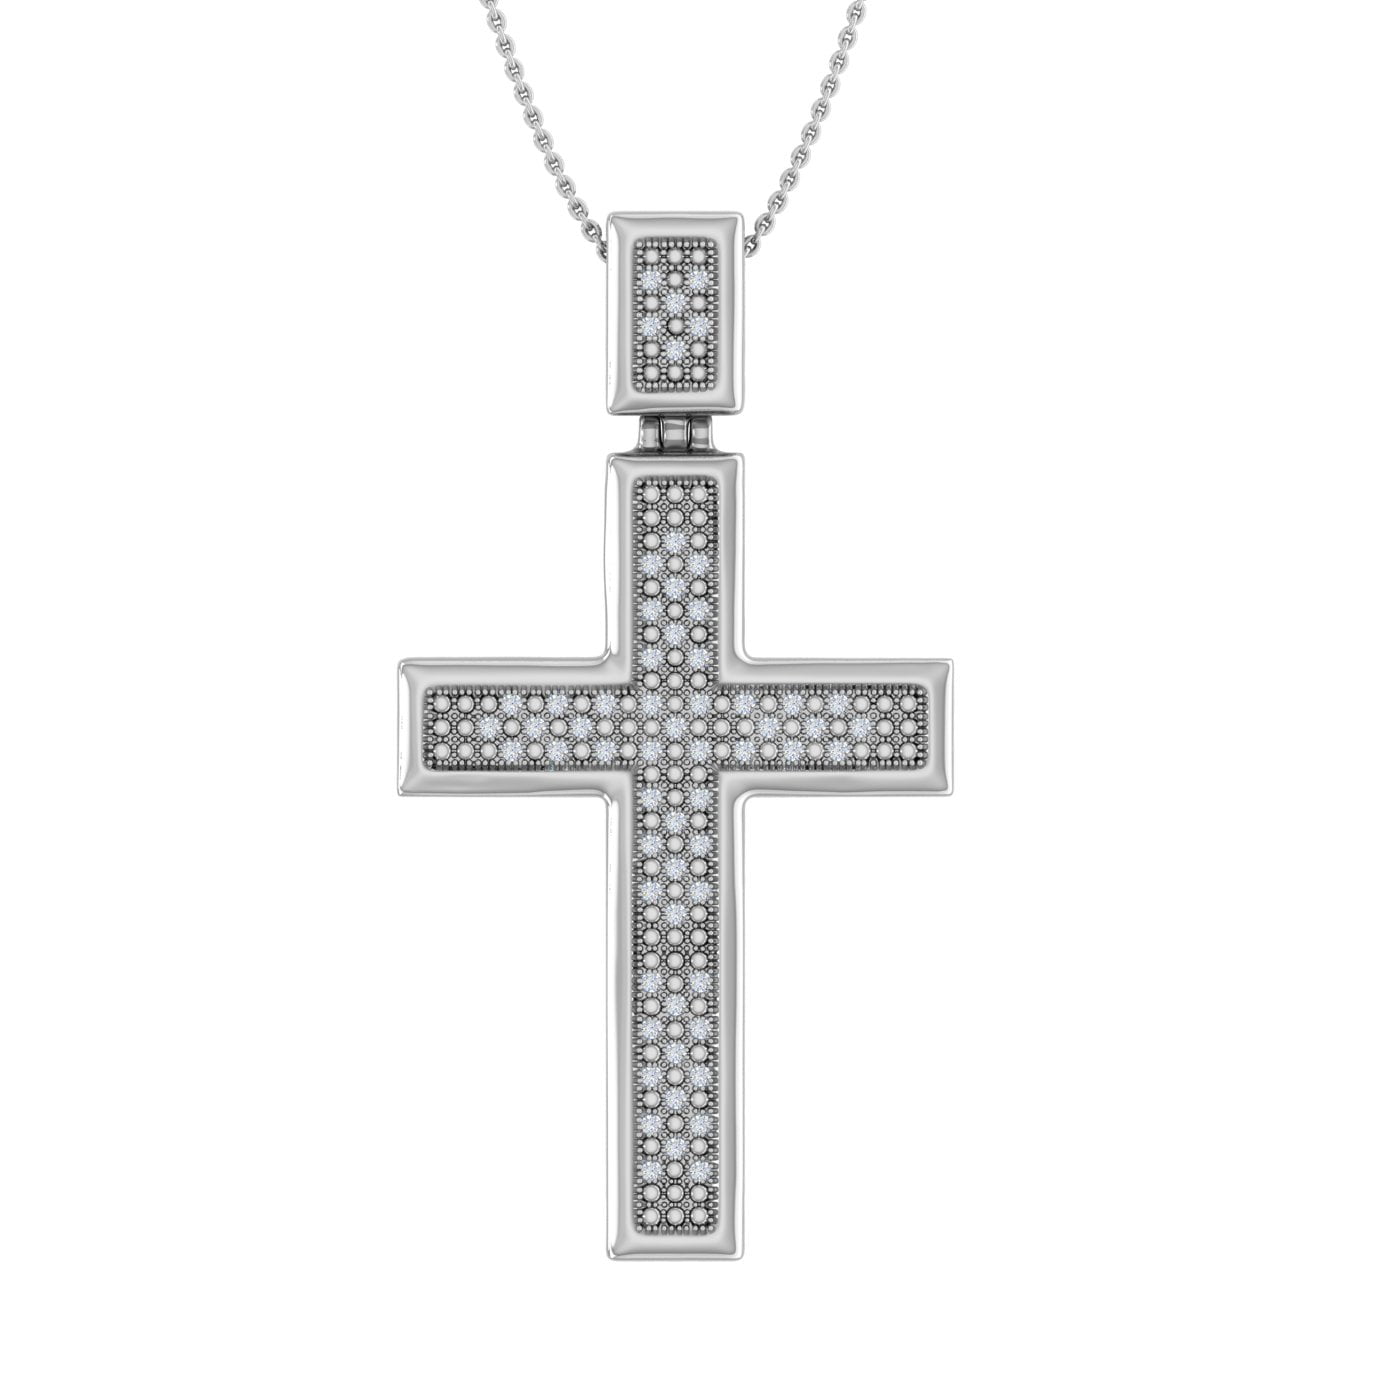 Men's Silver Diamond Cross Pendant Necklace (1/4 Carat) with 20 Inch Chain